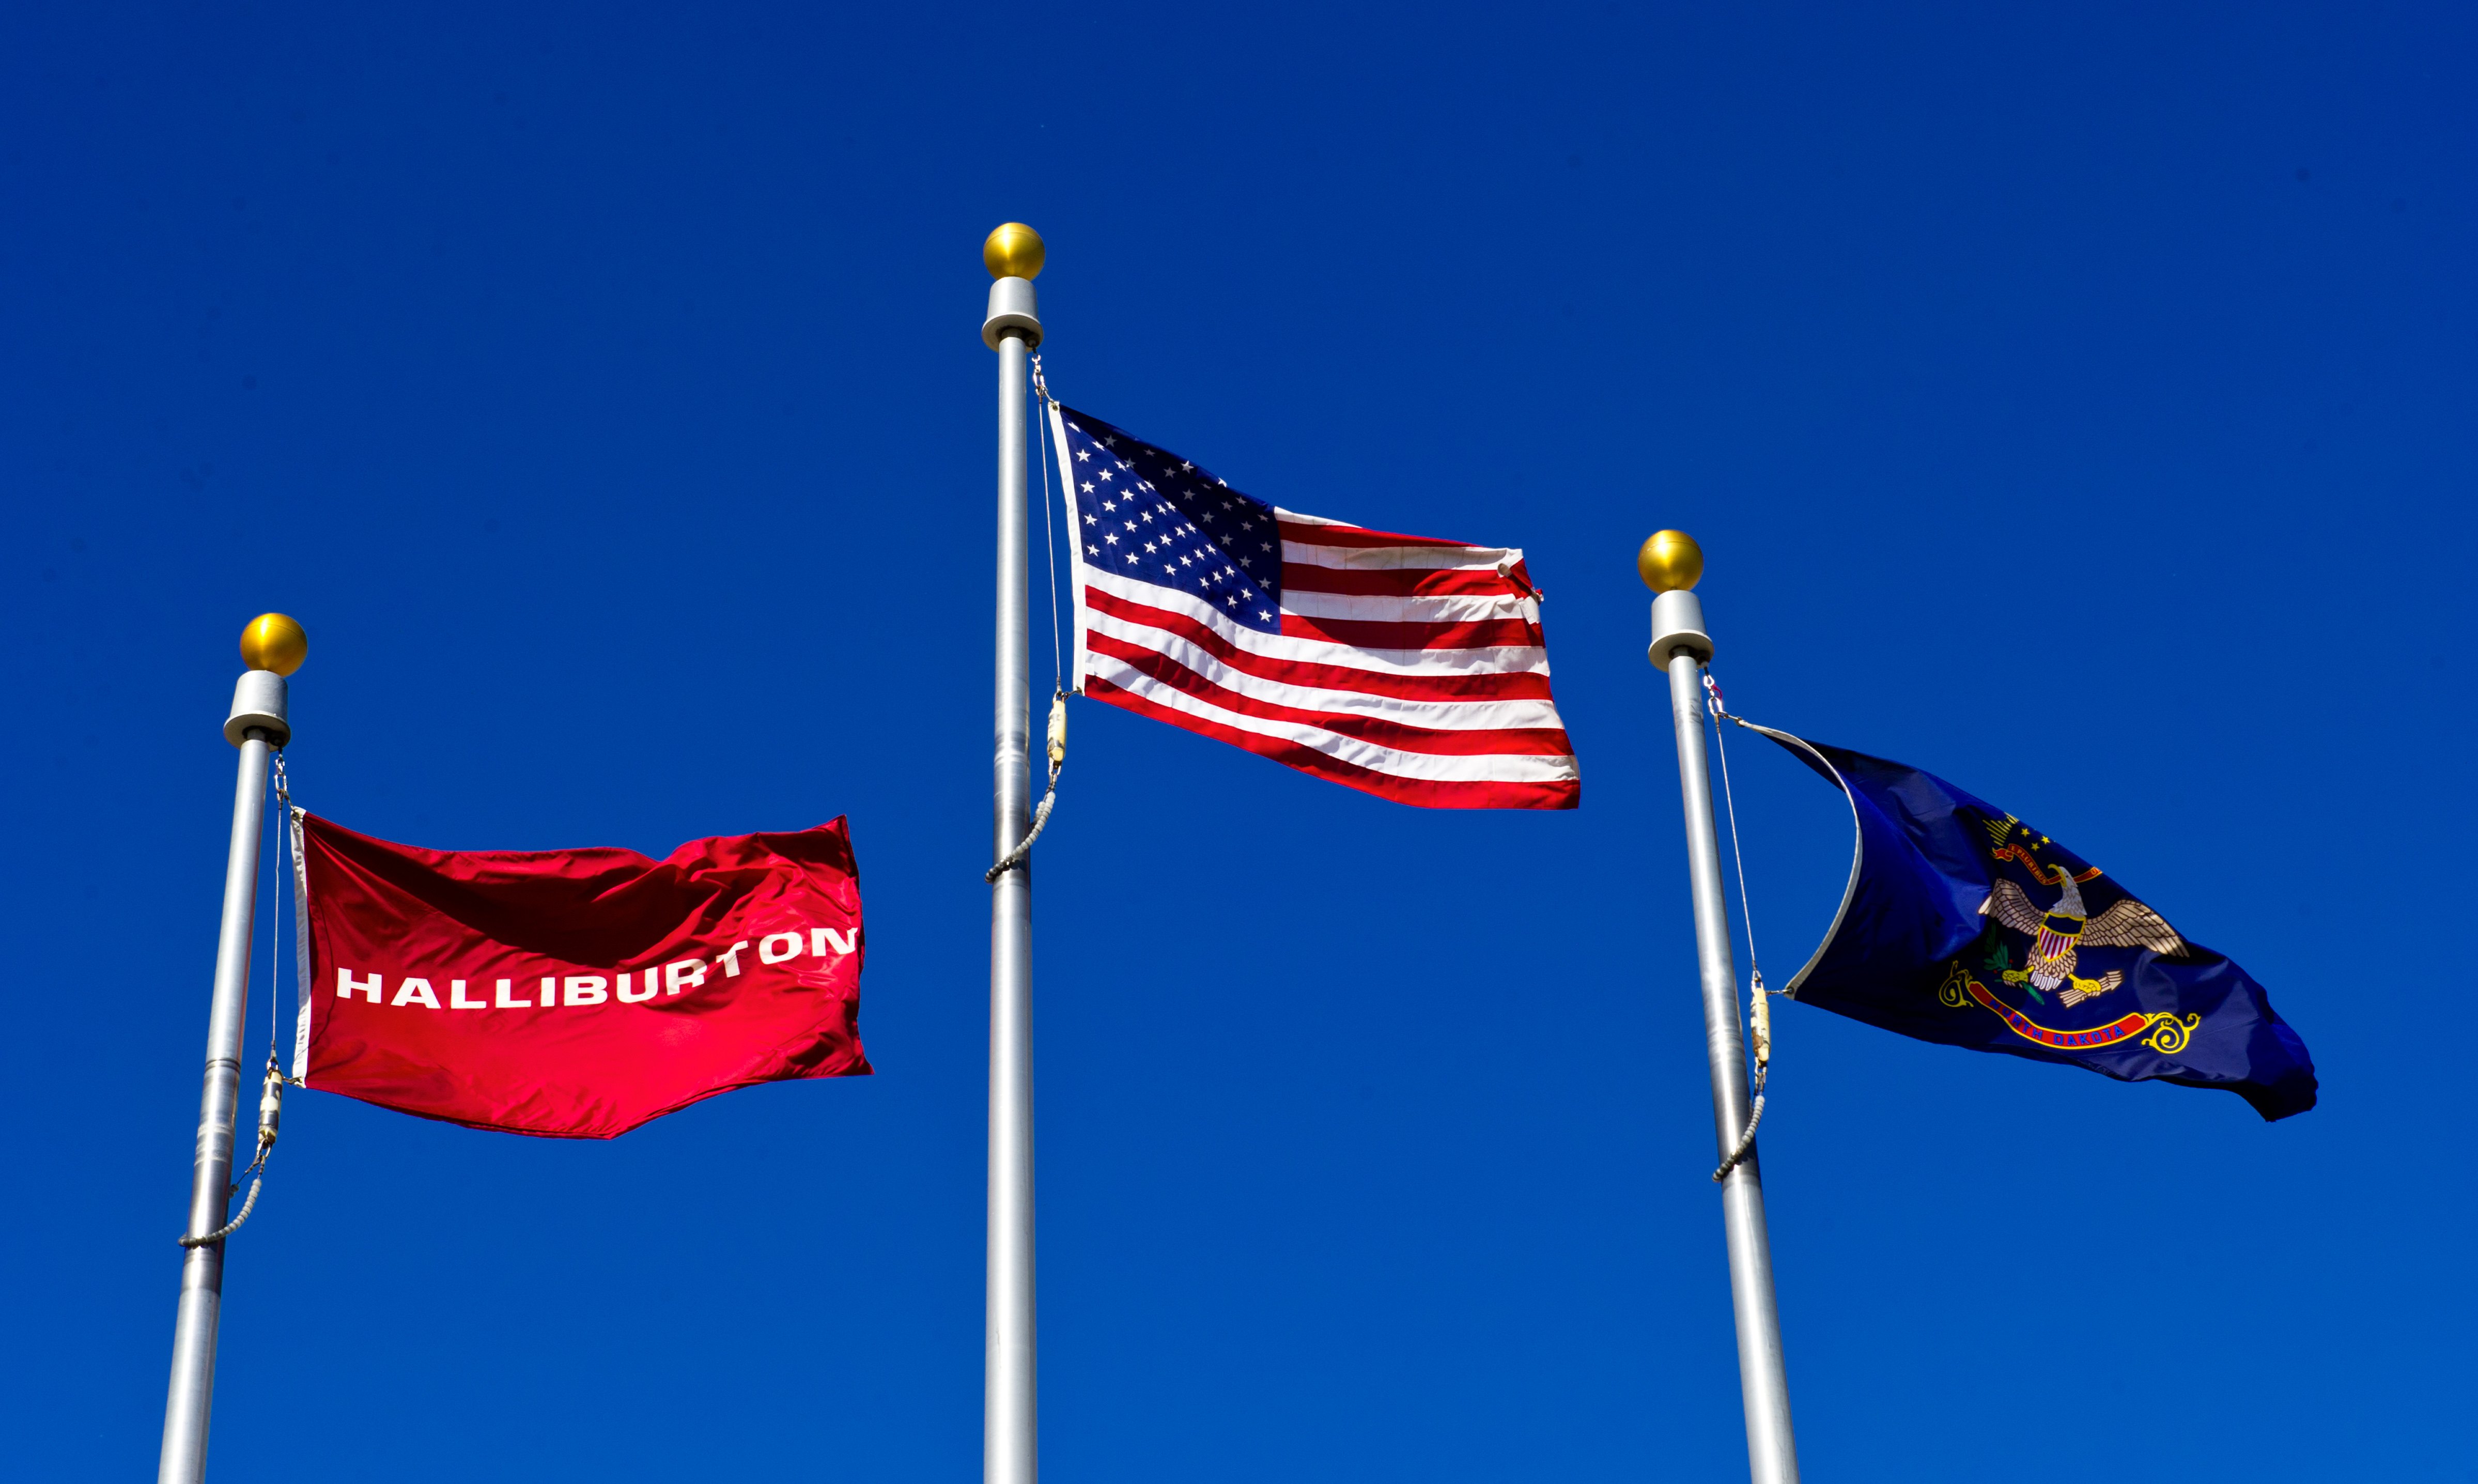 Flags flying at a Halliburton facility in Williston, North Dakota on Aug. 20, 2013.